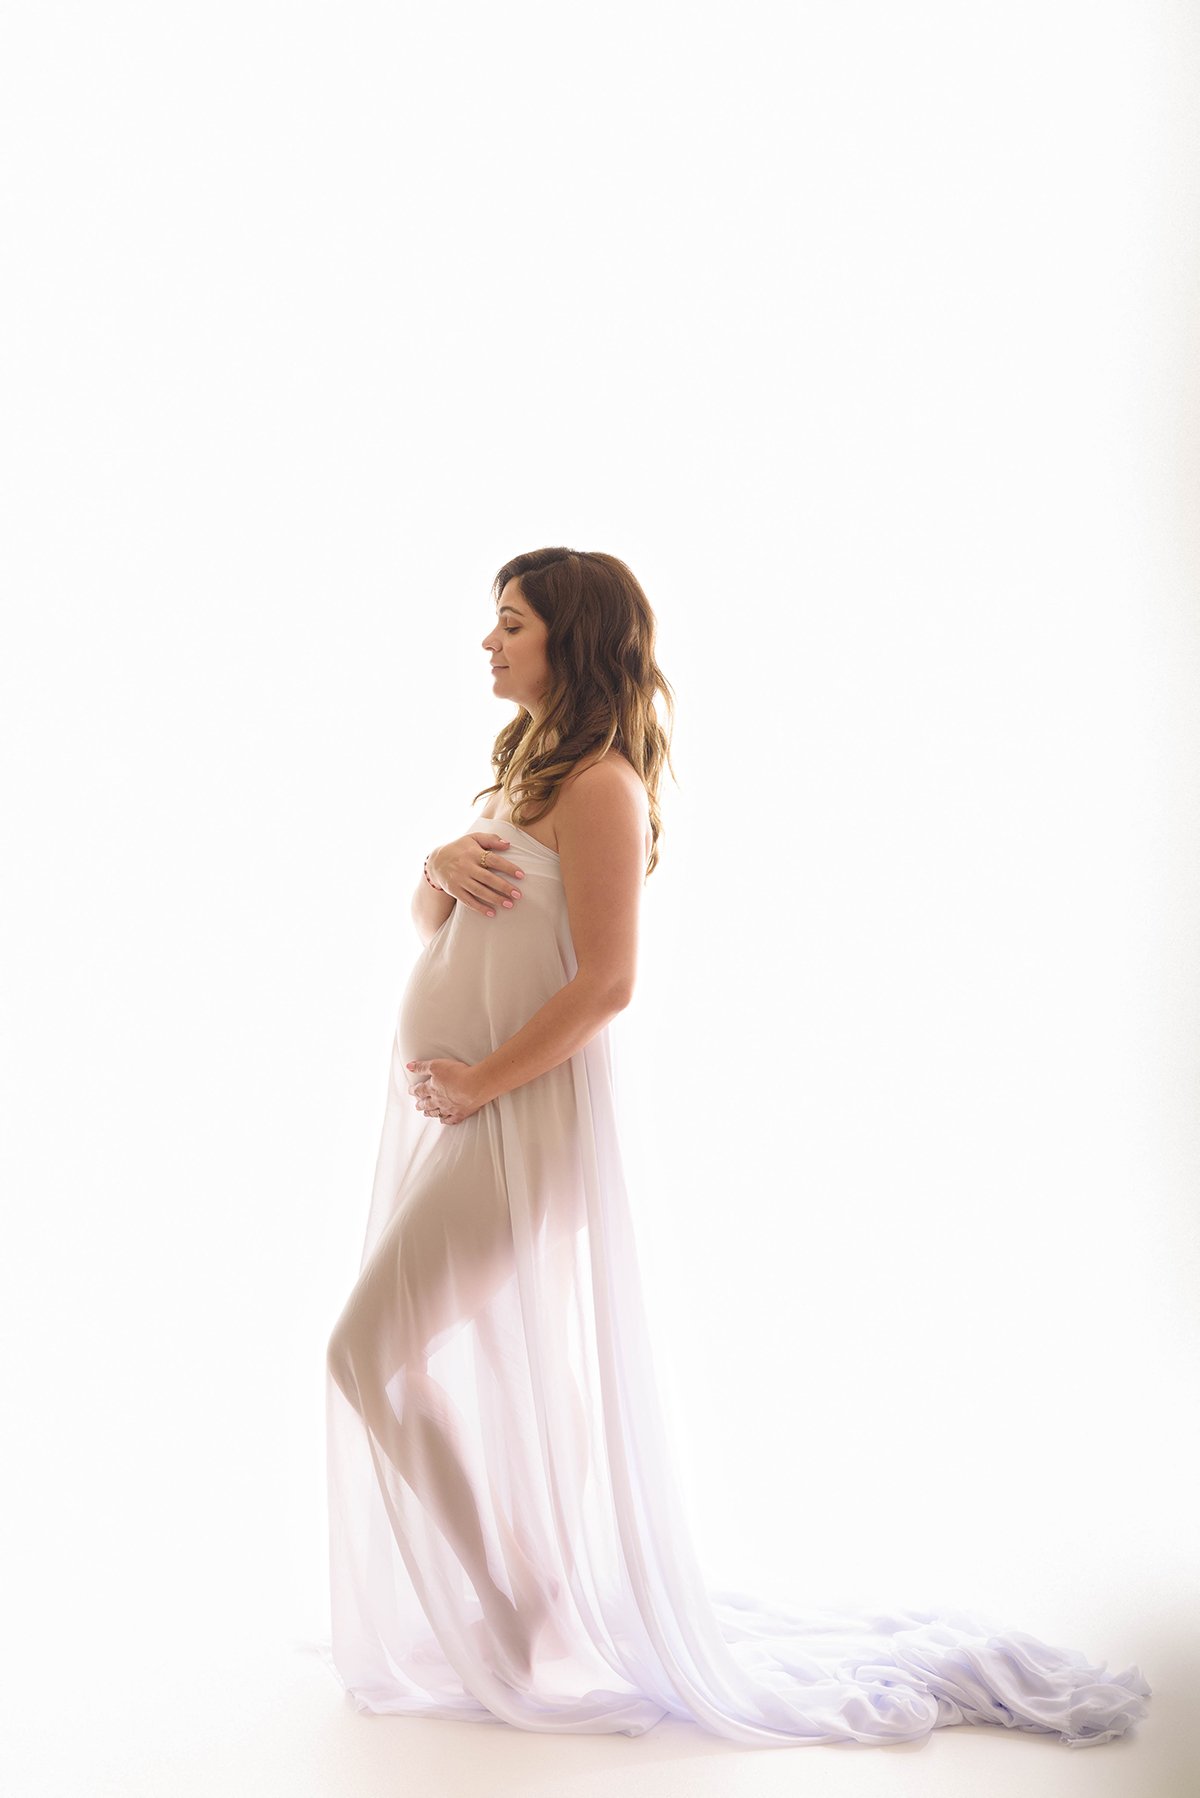 maternity-pregnancy-photographer-san-juan-puerto-rico-fabric-dress-gown-fotografa-maternidad-embarazo-22.jpg